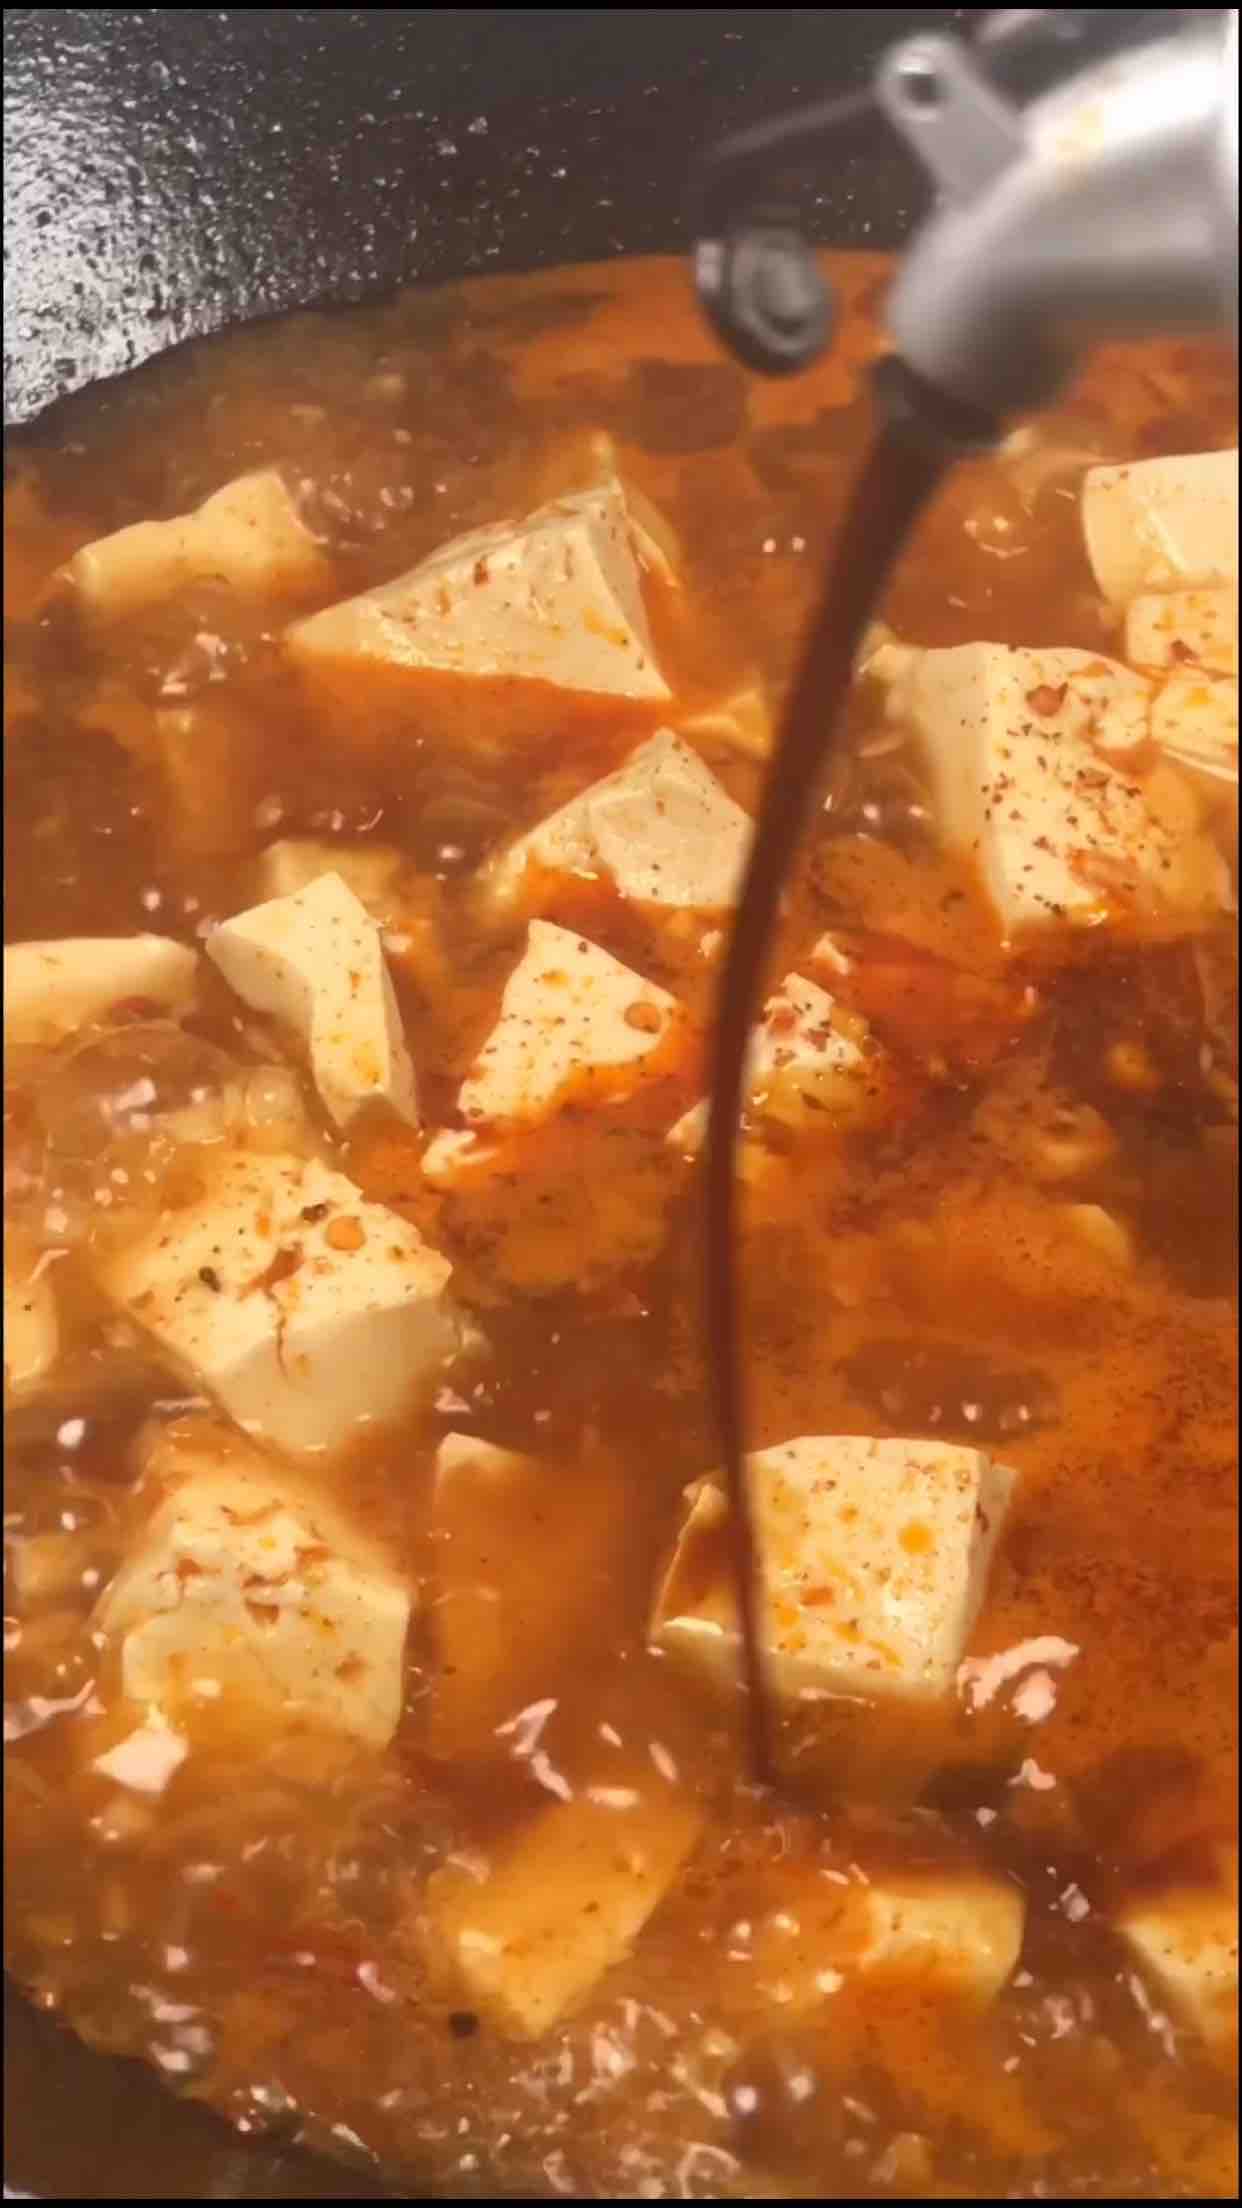 Sichuan Style Pork Moto Tofu recipe